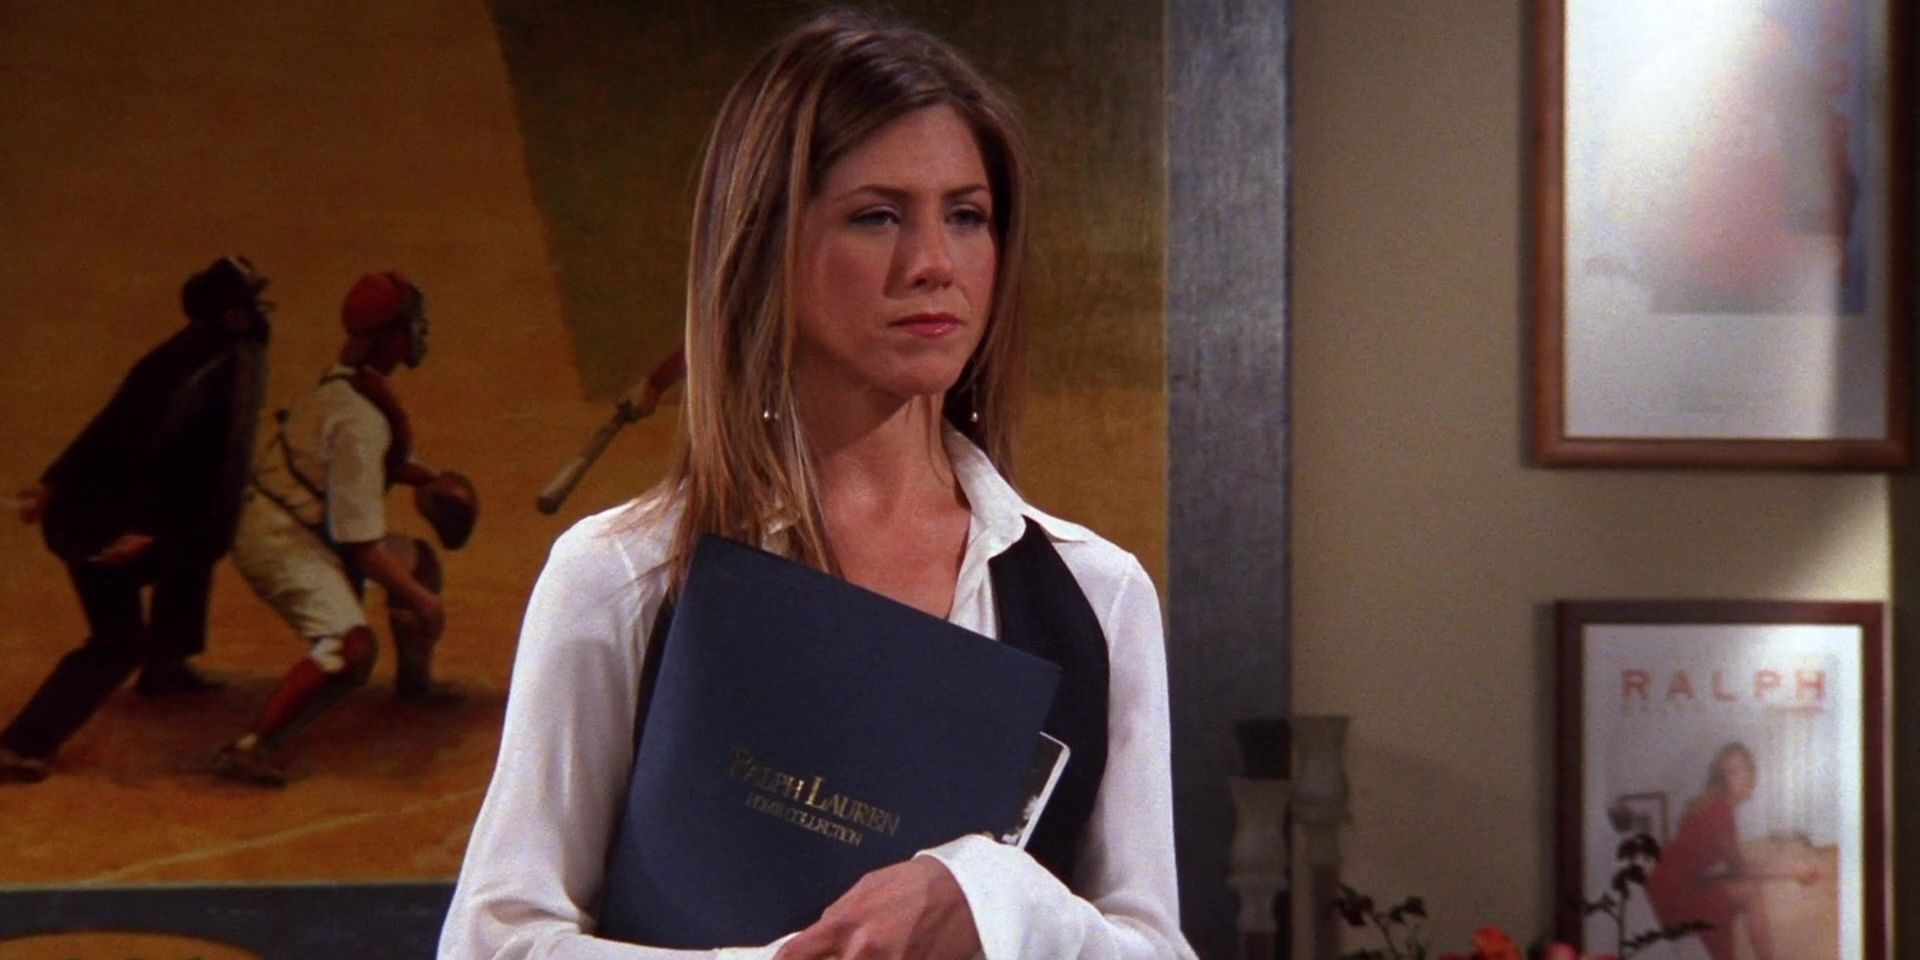 Rachel in her office holding a folder